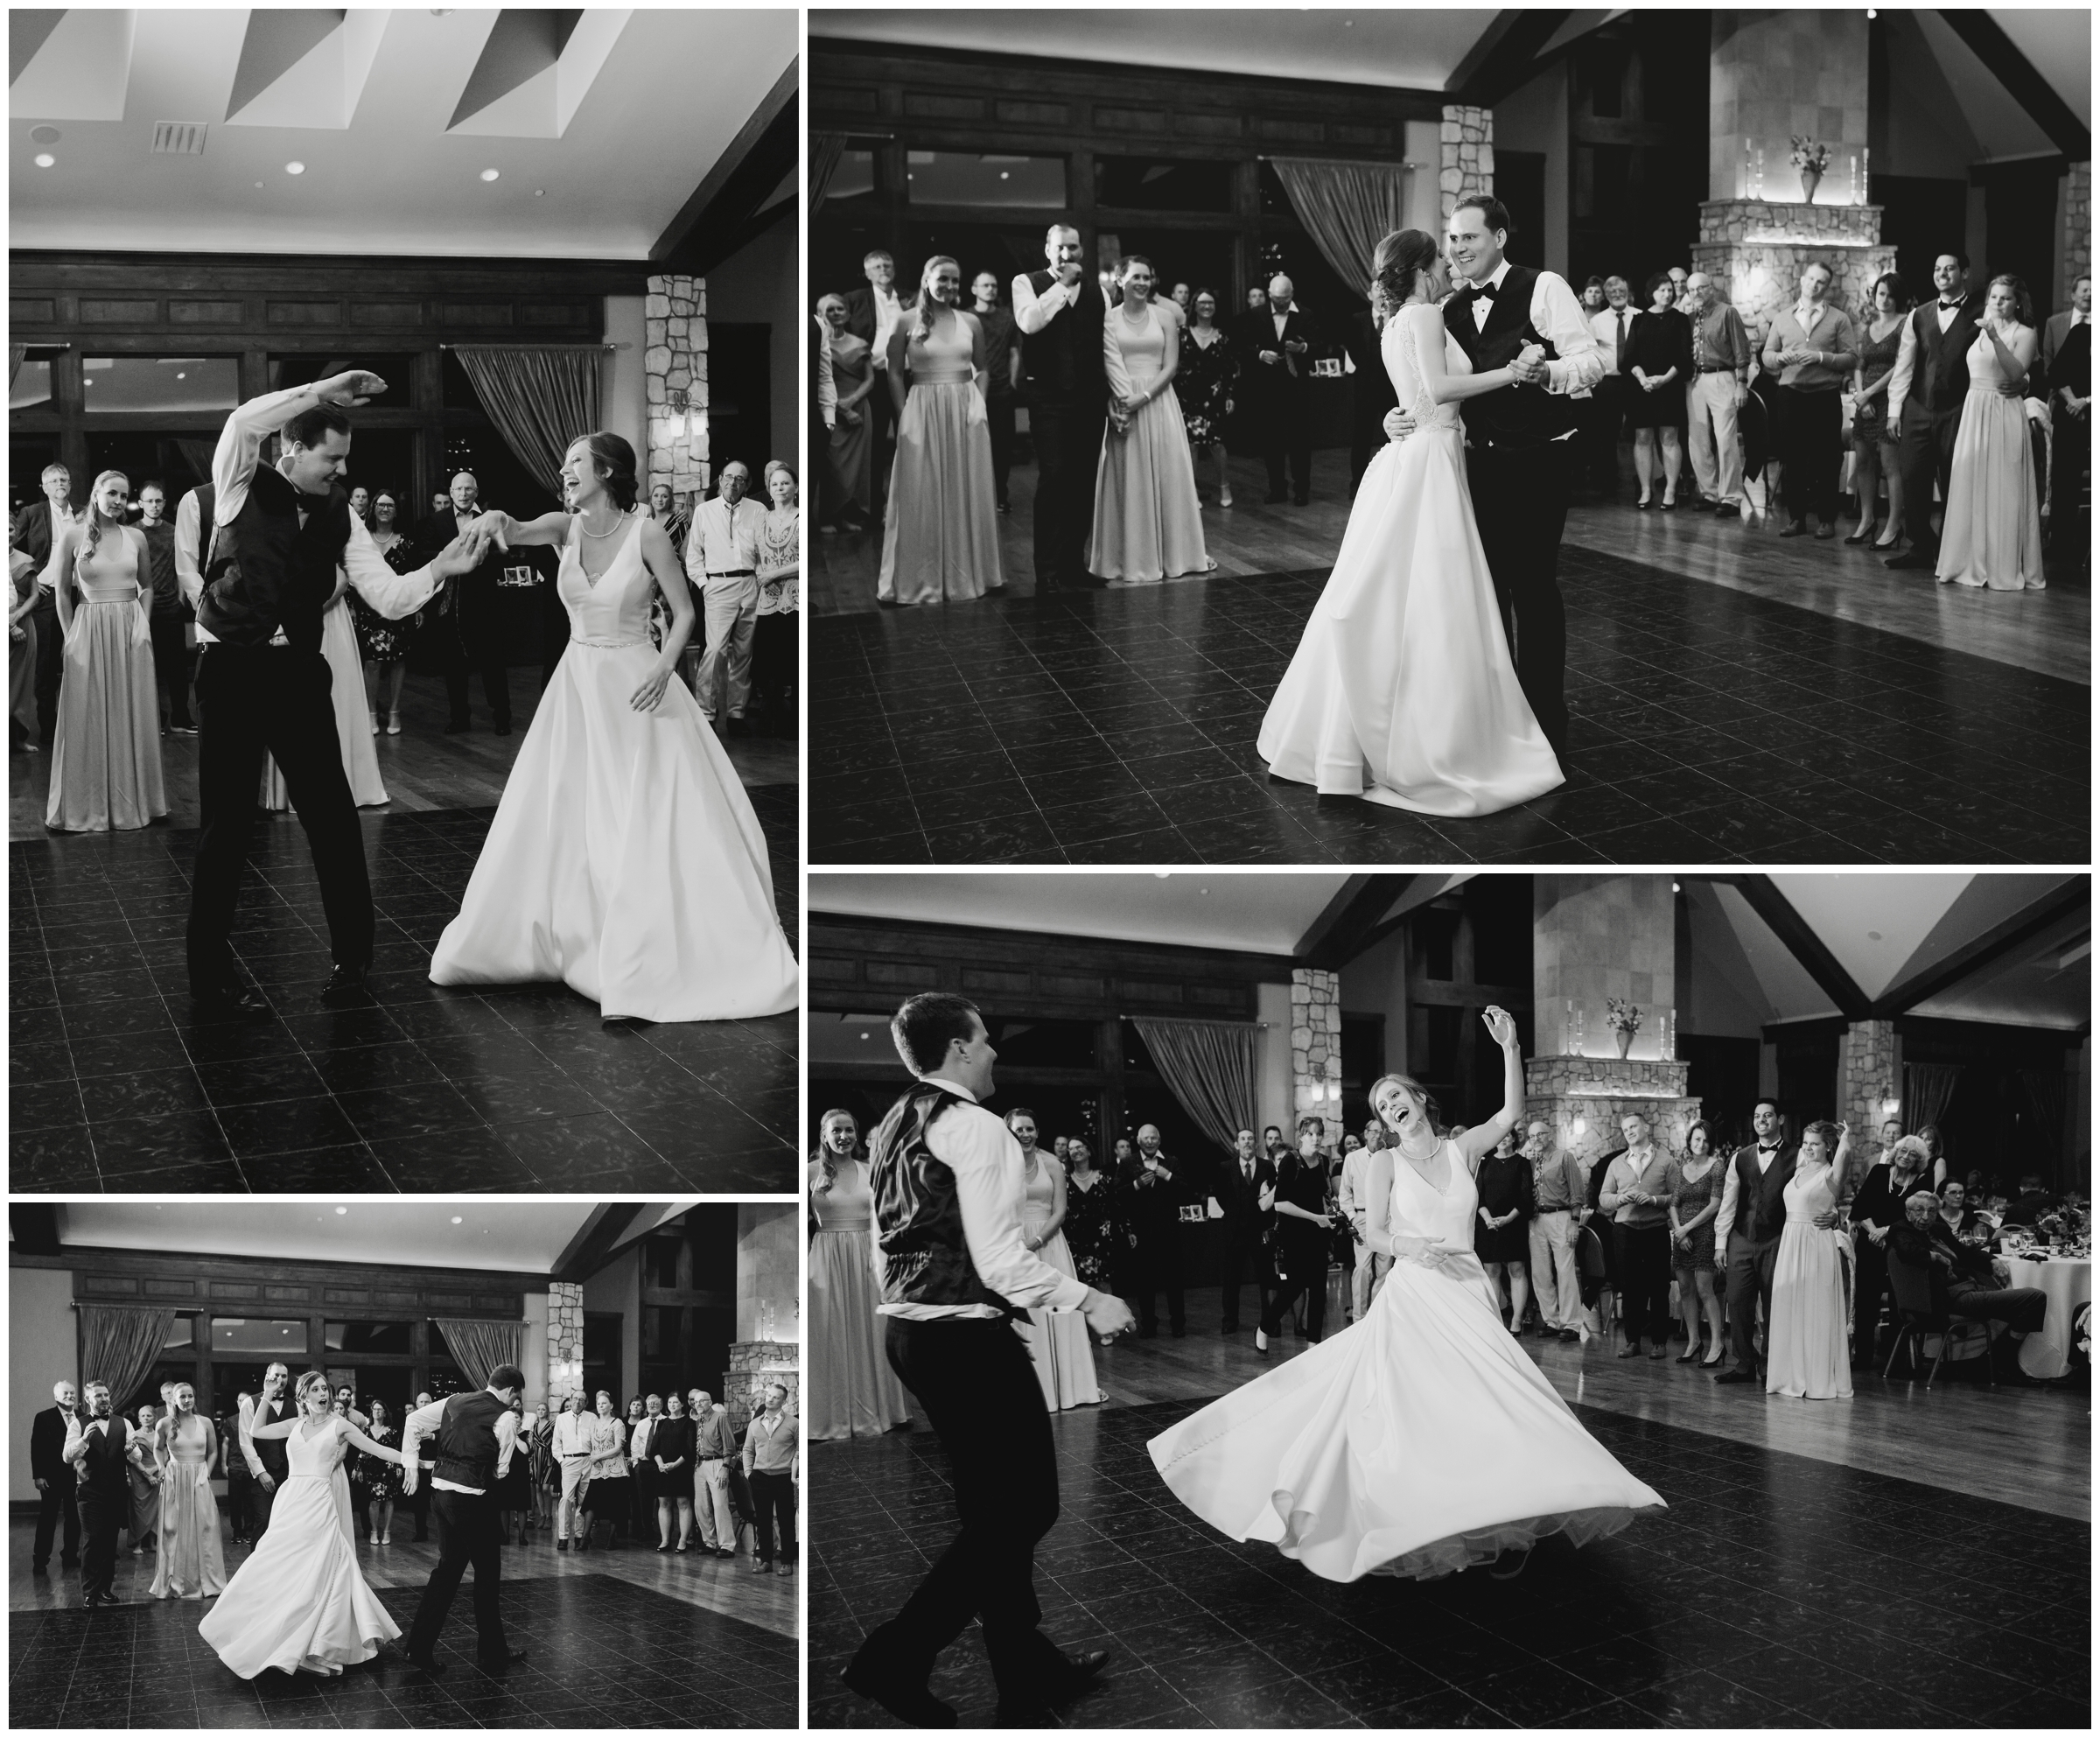 bride and groom's first dance at Denver Colorado ballroom wedding reception 